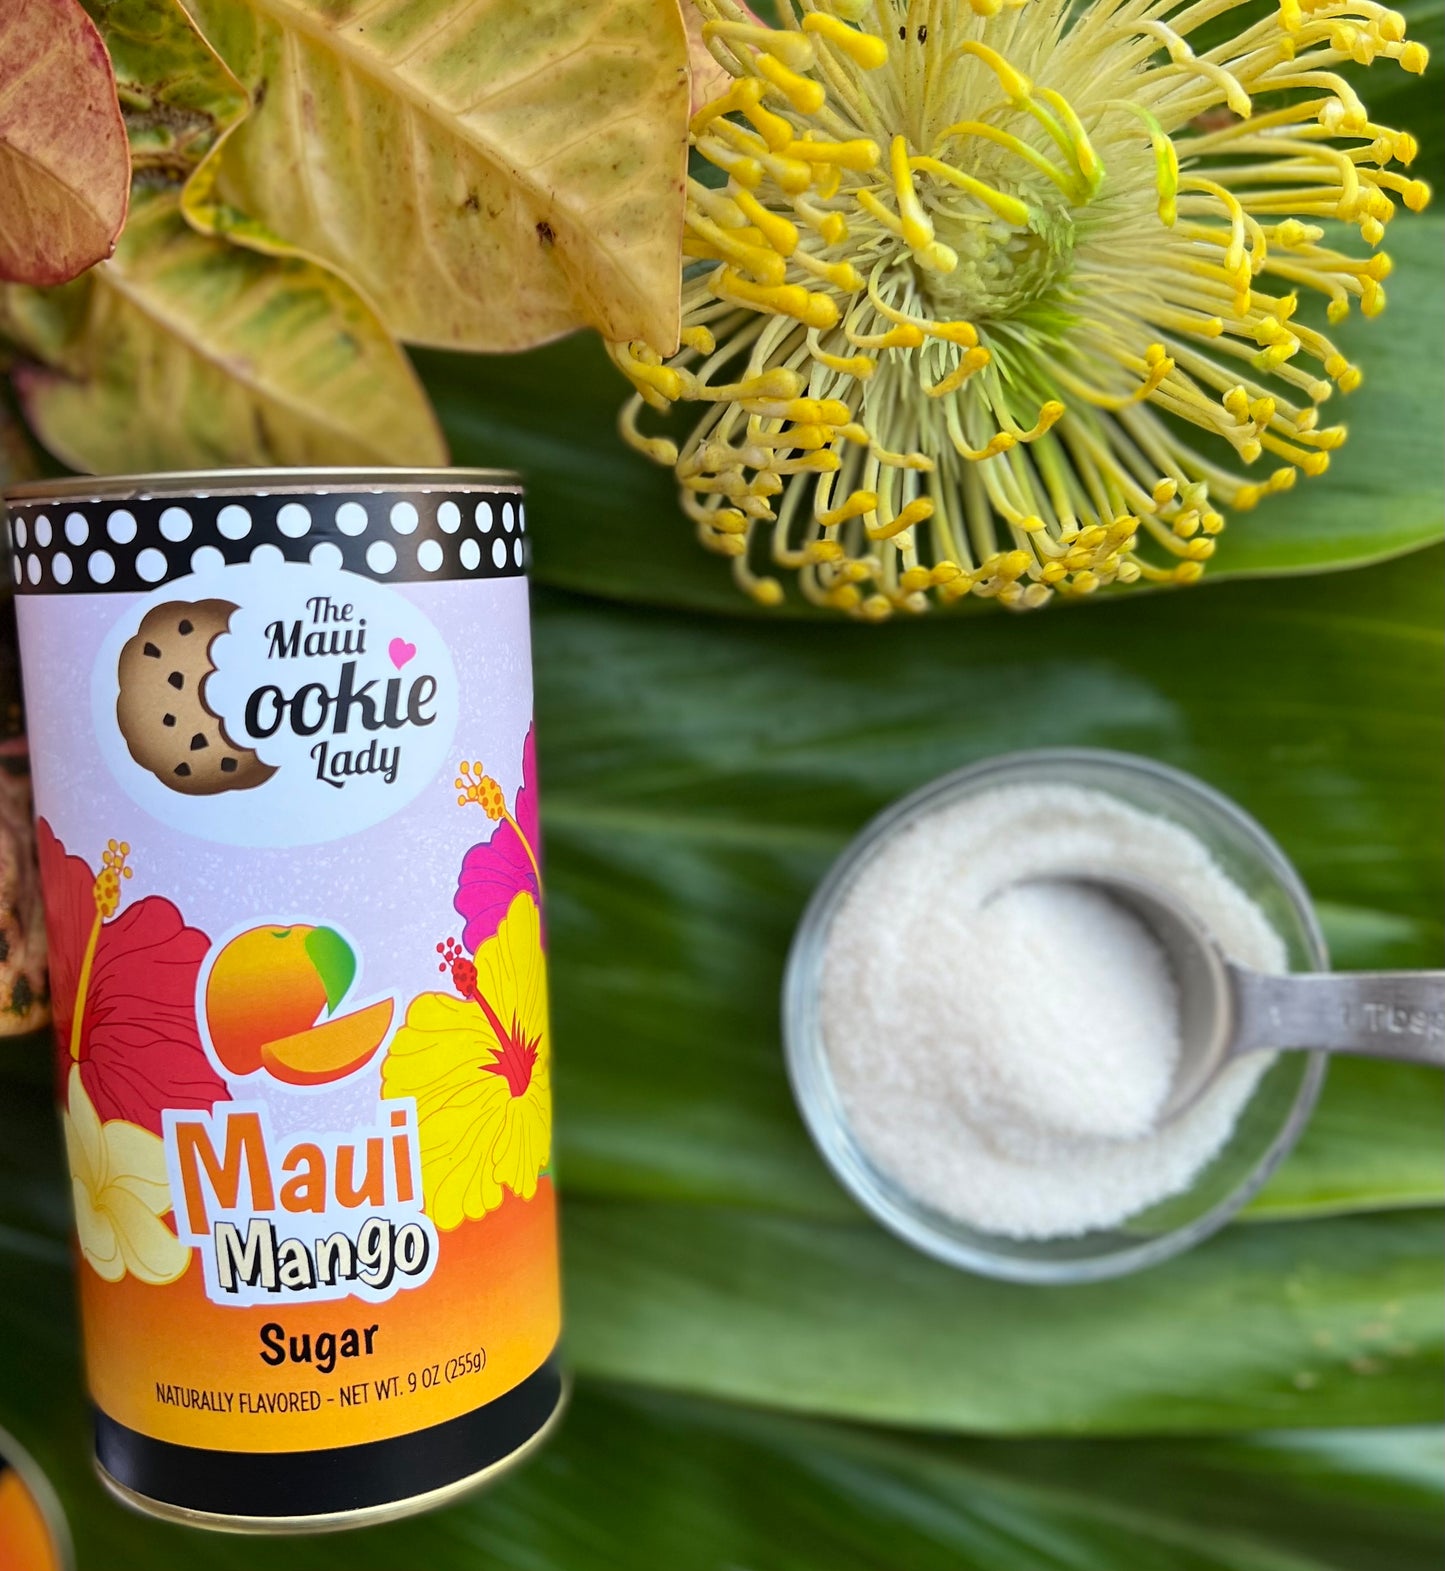 Mango Infused Organic Sugar, The Maui Cookie Lady 9oz tin can